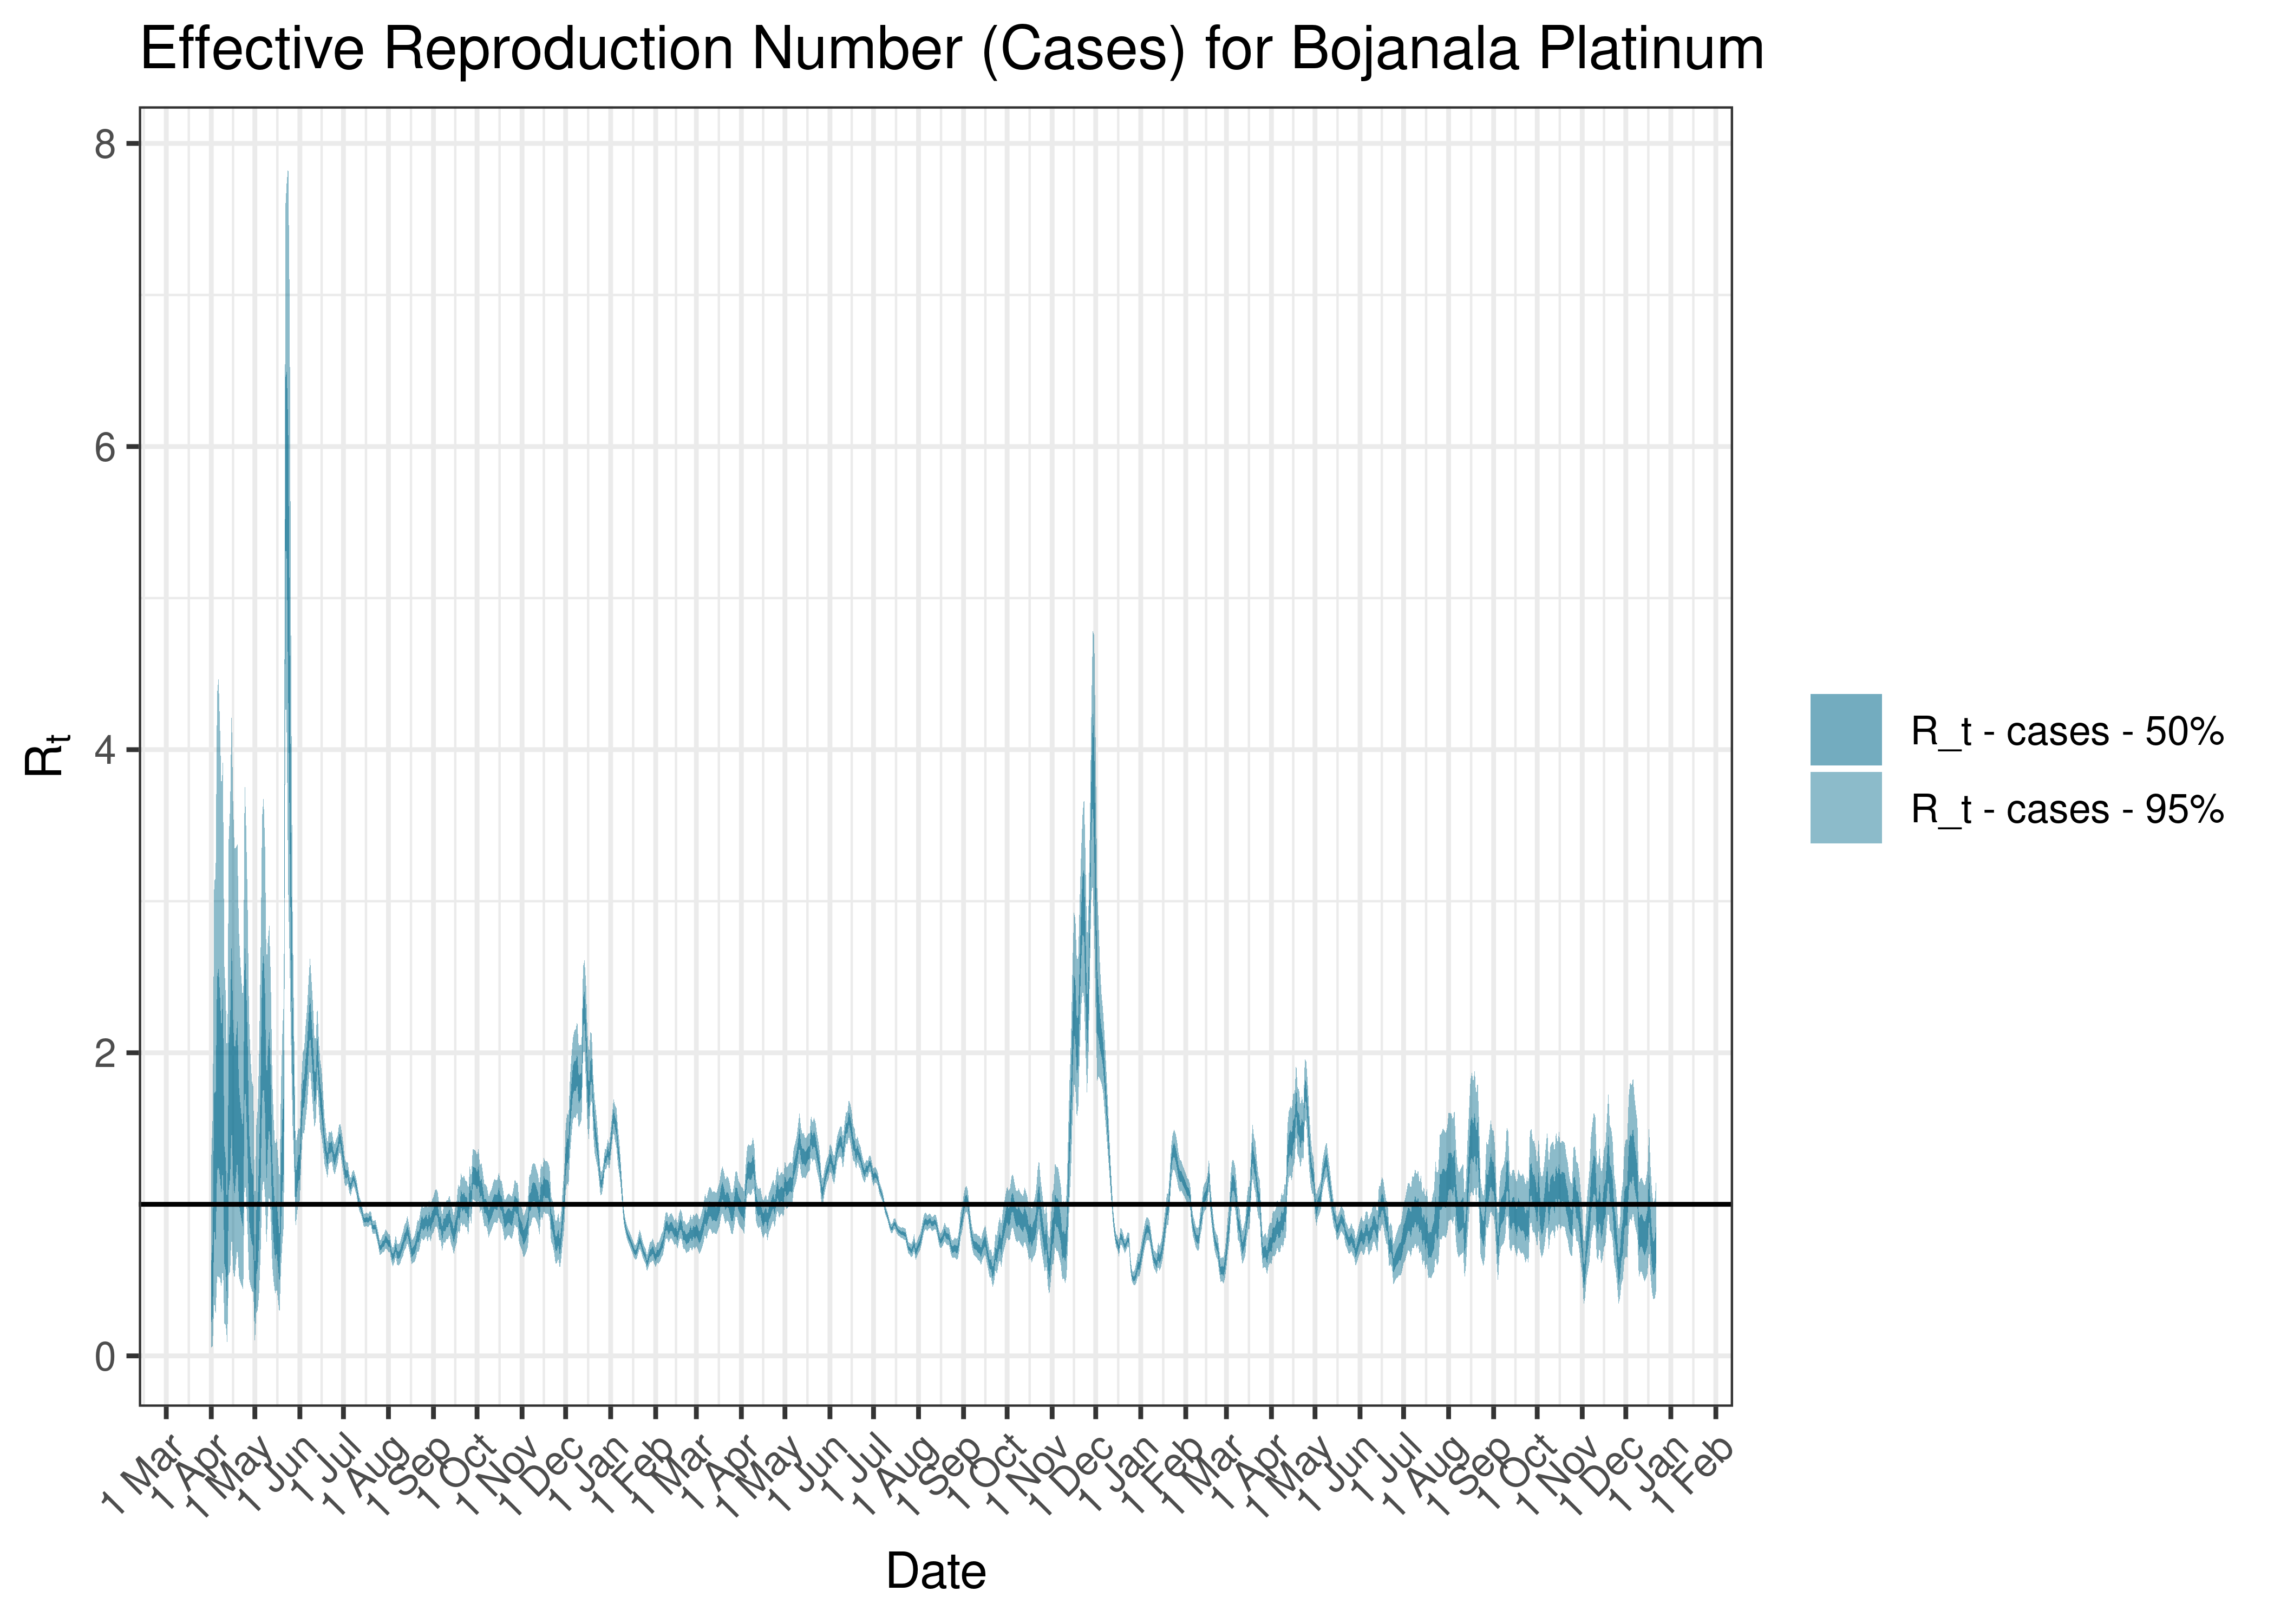 Estimated Effective Reproduction Number Based on Cases for Bojanala Platinum since 1 April 2020